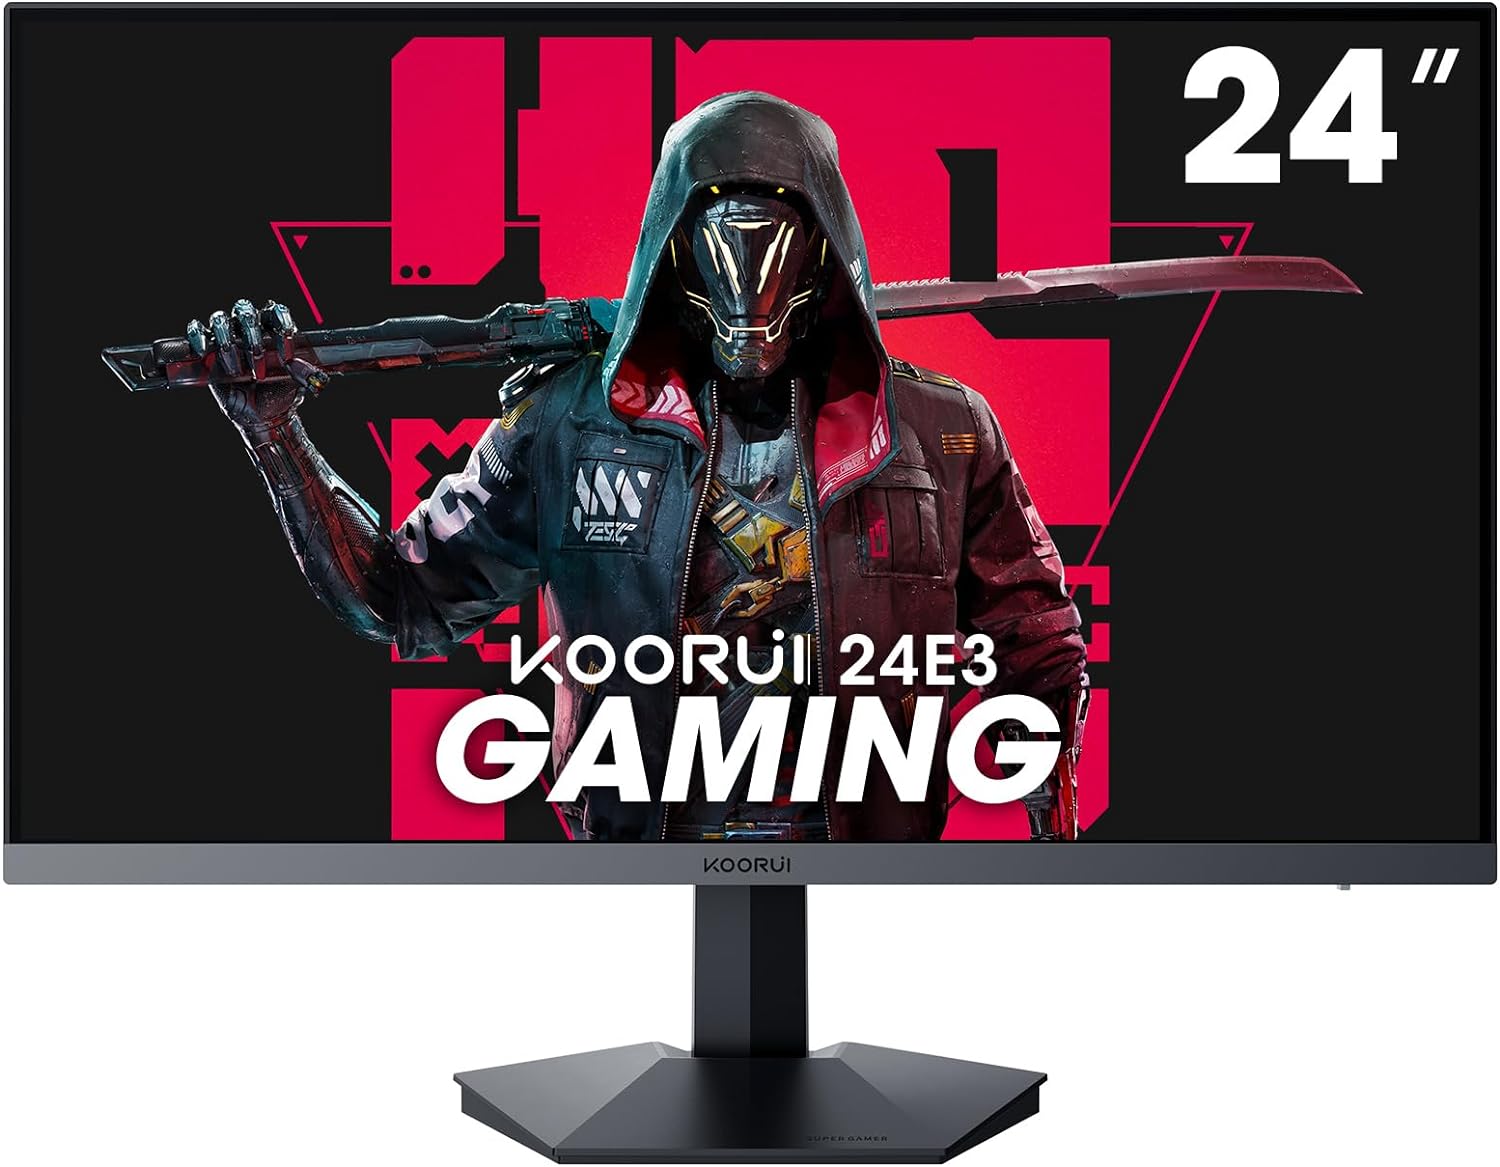 KOORUI 24" Gaming Monitor